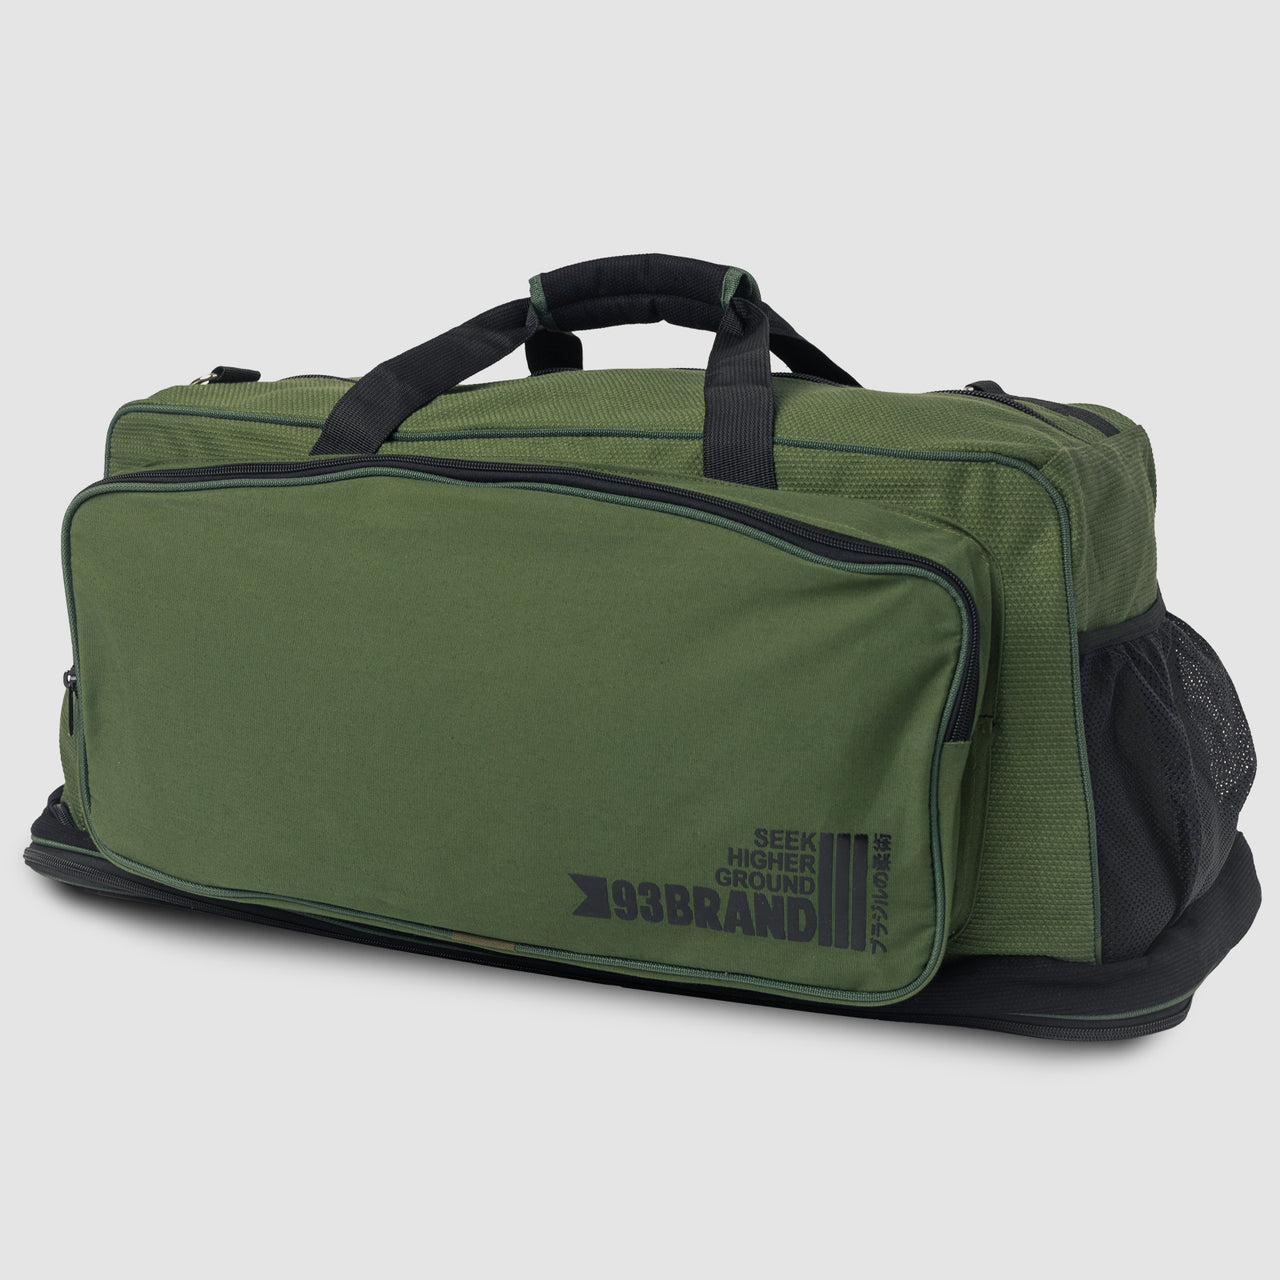 93brand "XL Pearl Weave" Duffel Bag (Olive Green)